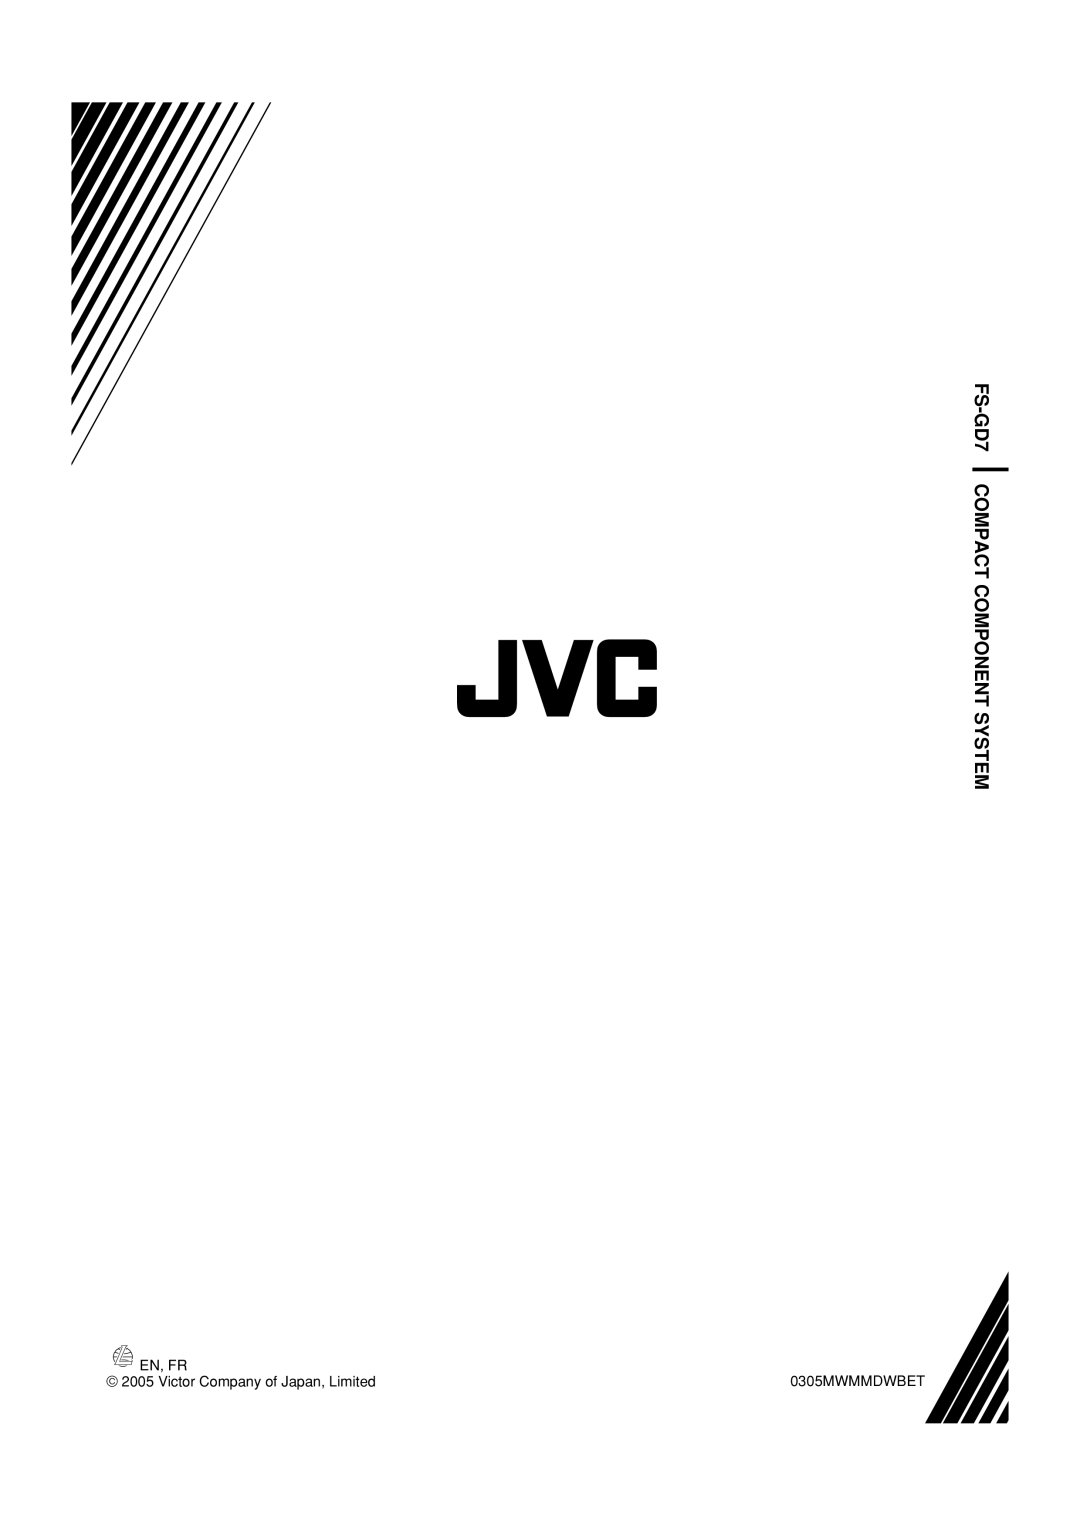 JVC LVT1348-001C, SP-FSGD7 manual FS-GD7COMPACT COMPONENT SYSTEM, En, Fr, 0305MWMMDWBET, Victor Company of Japan, Limited 